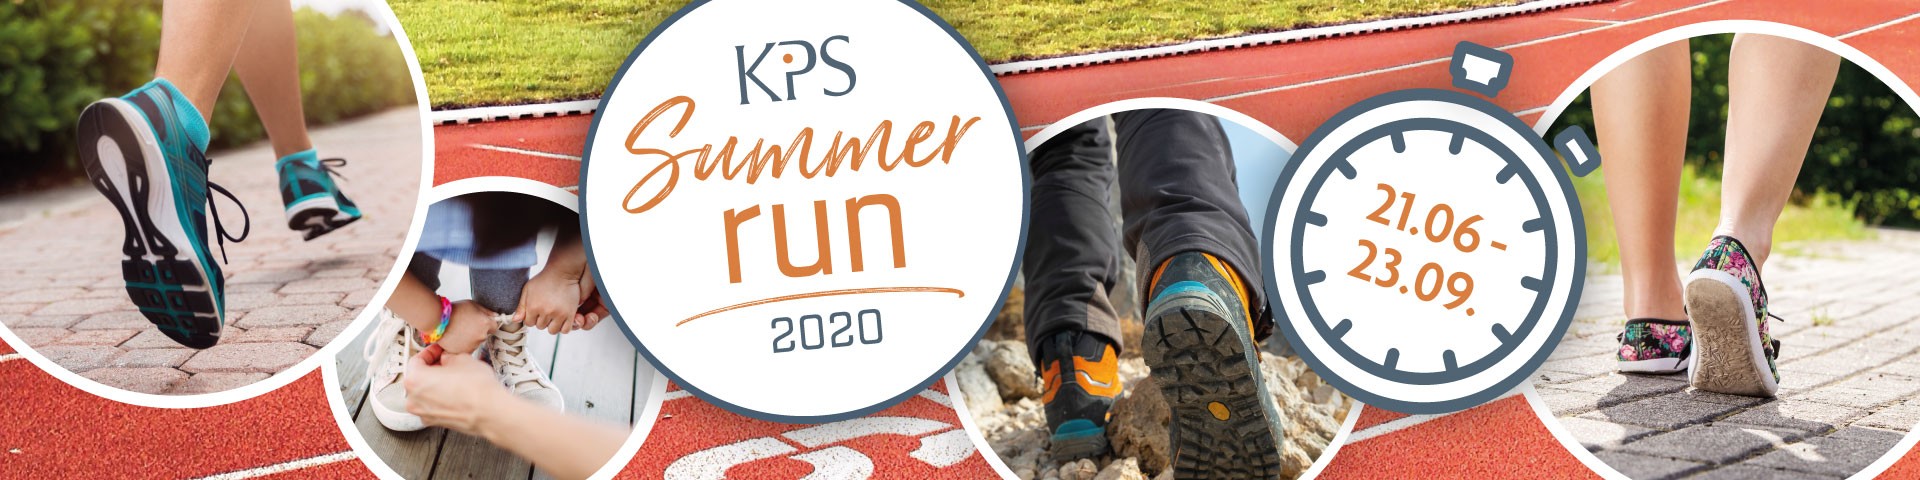 KPS Summer Run 2020